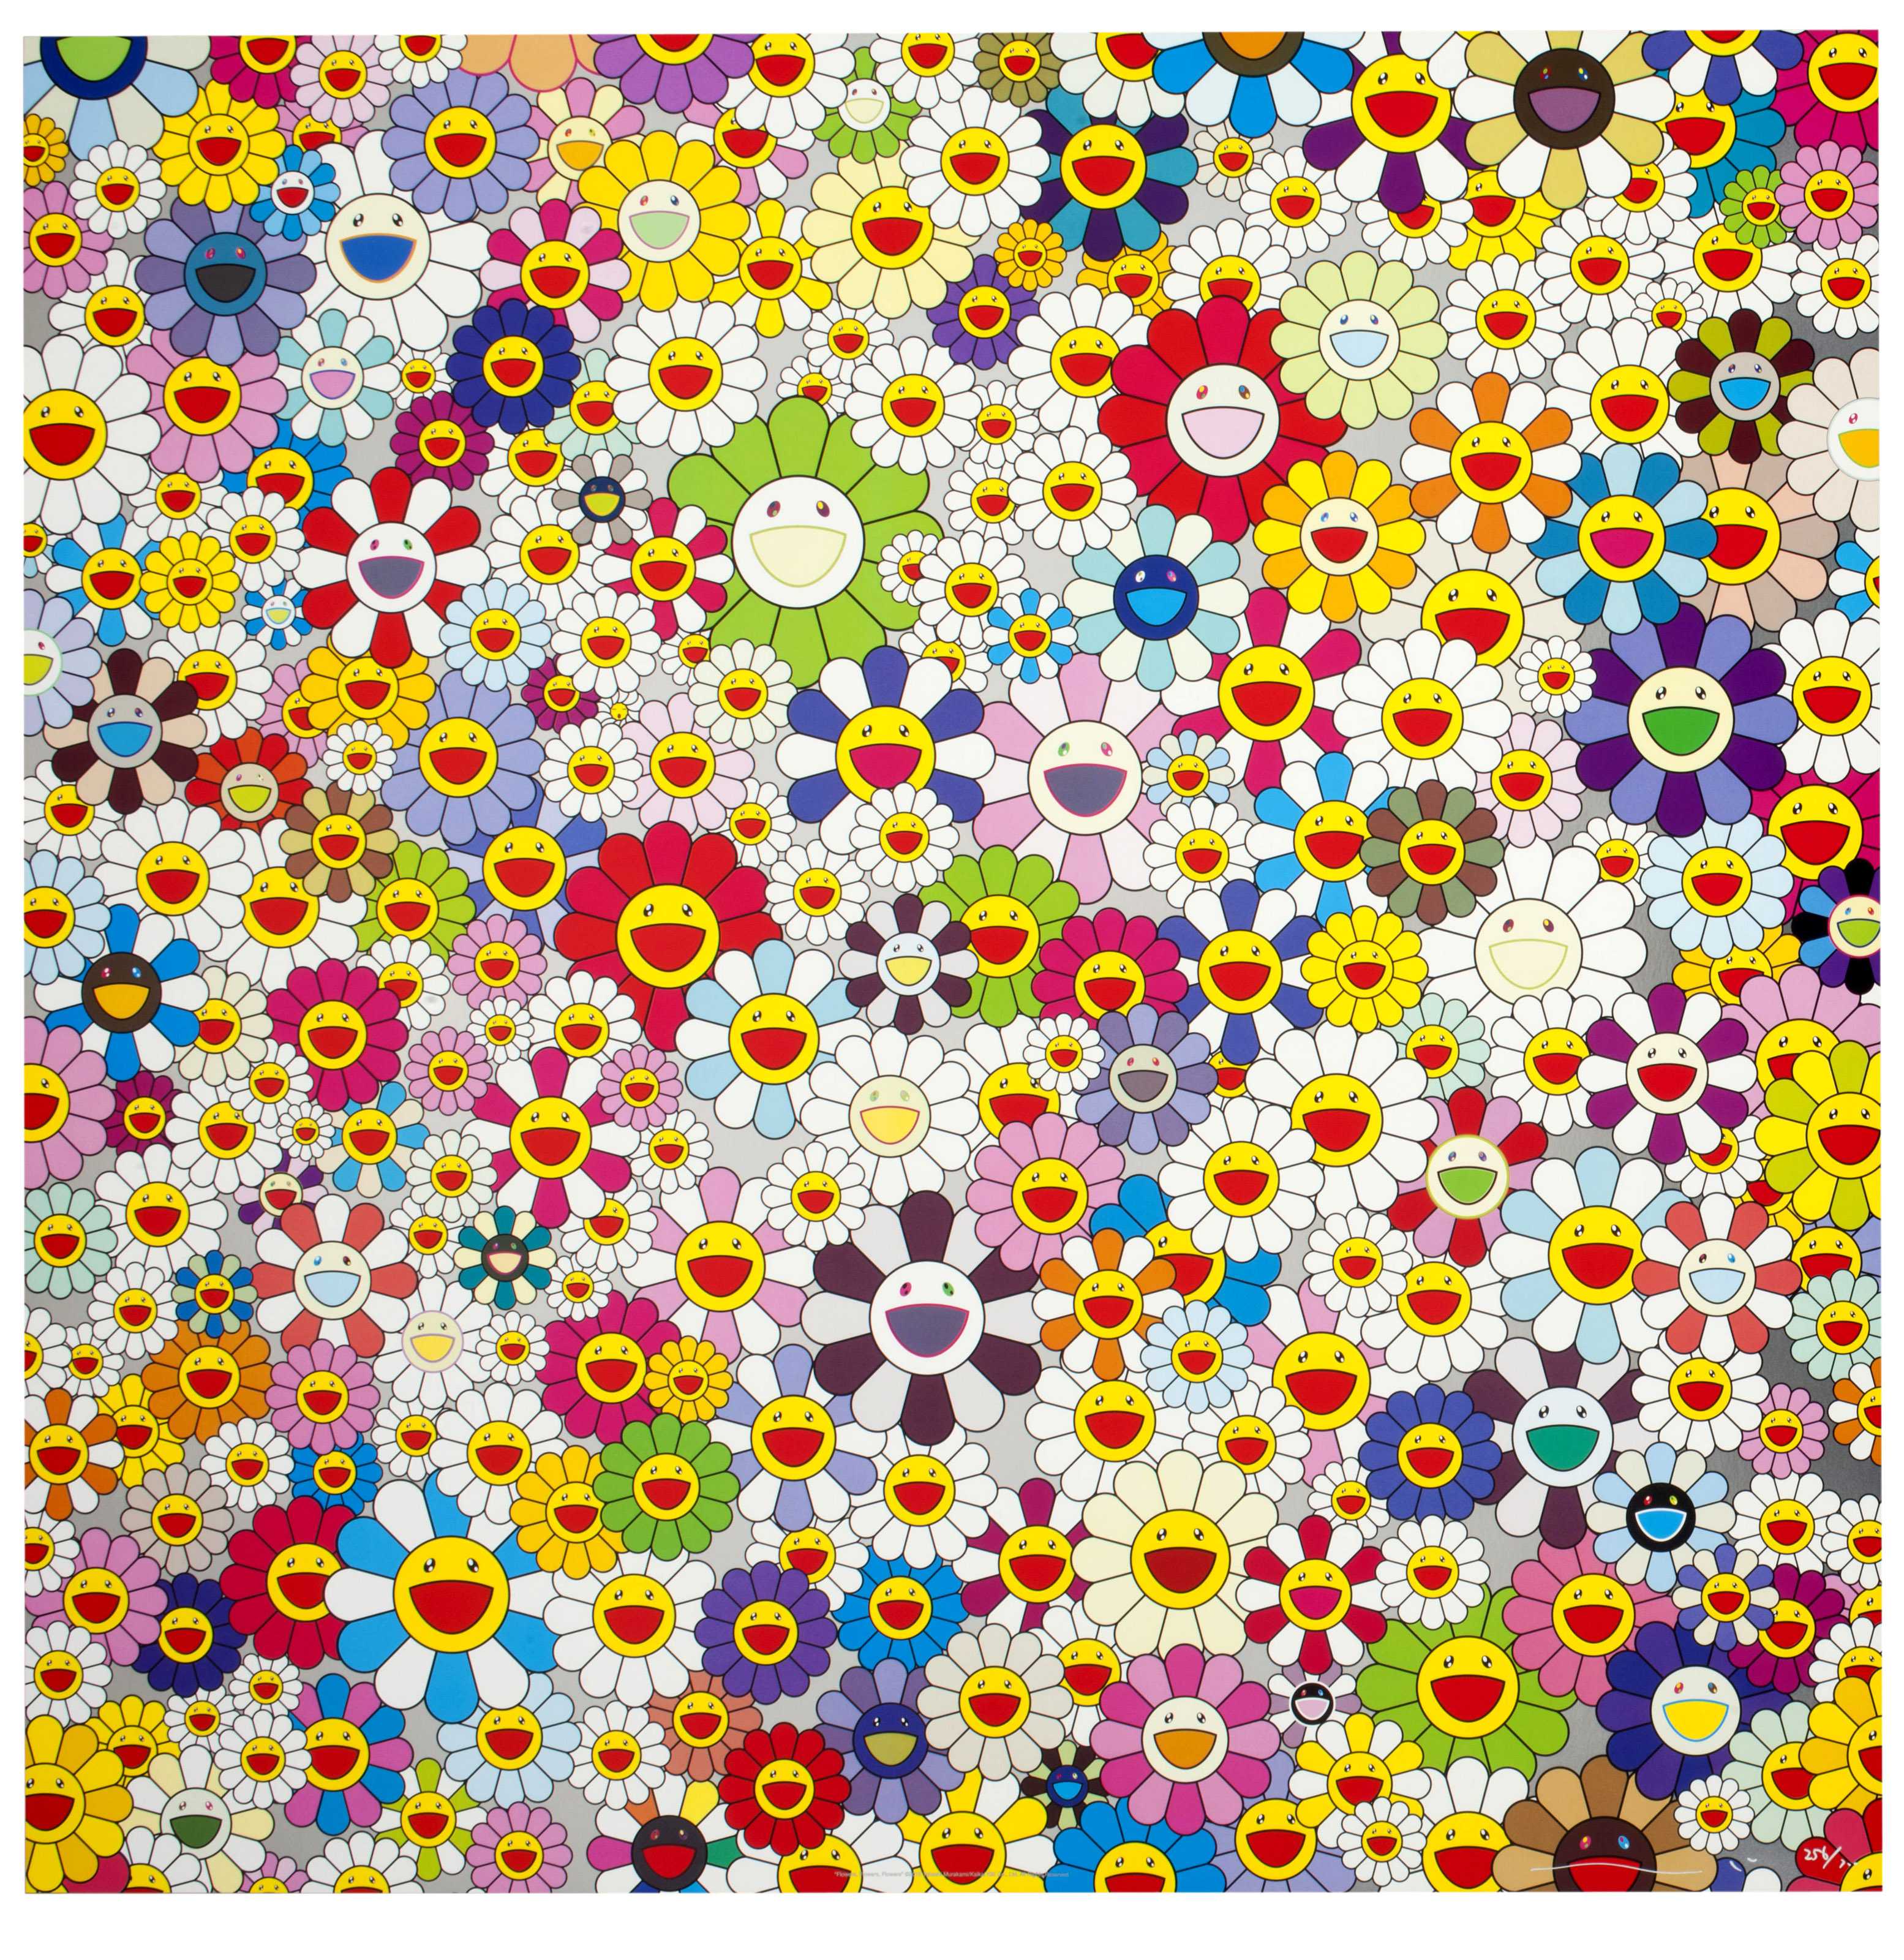 Takashi Murakami Flower iPhone Wallpapers - Wallpaper Cave